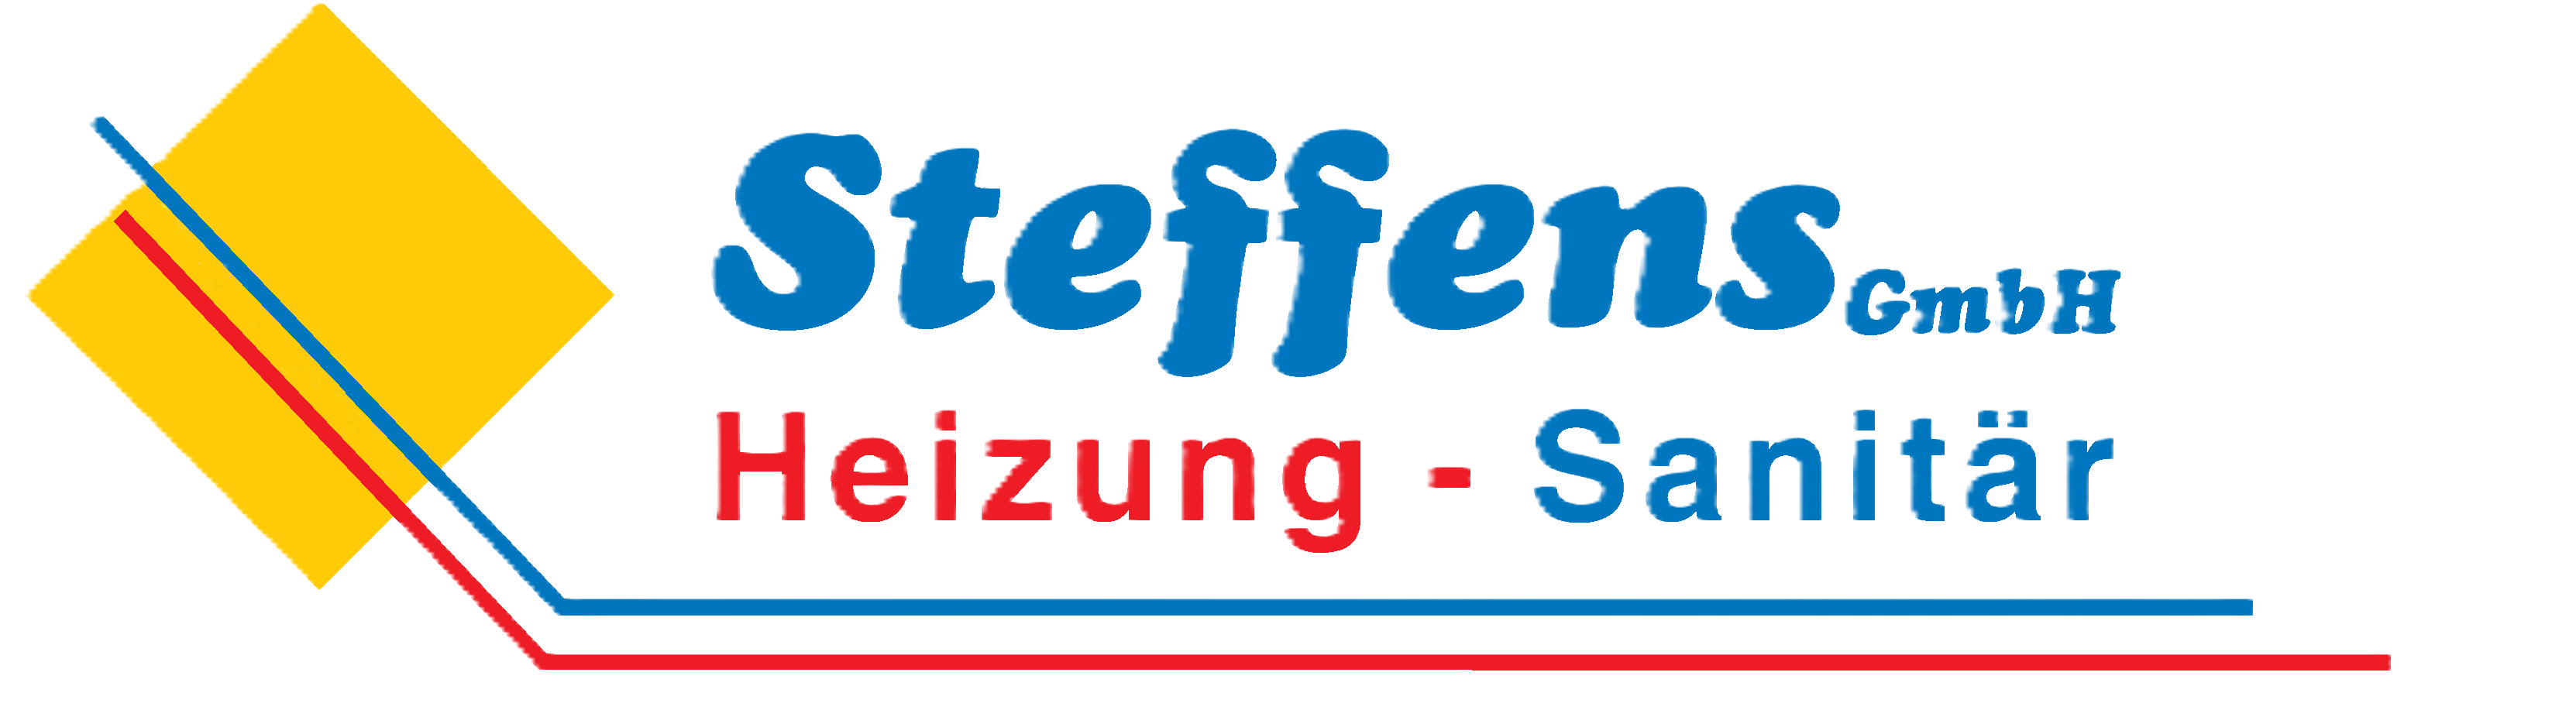 Steffens Heizung Sanitär GmbH